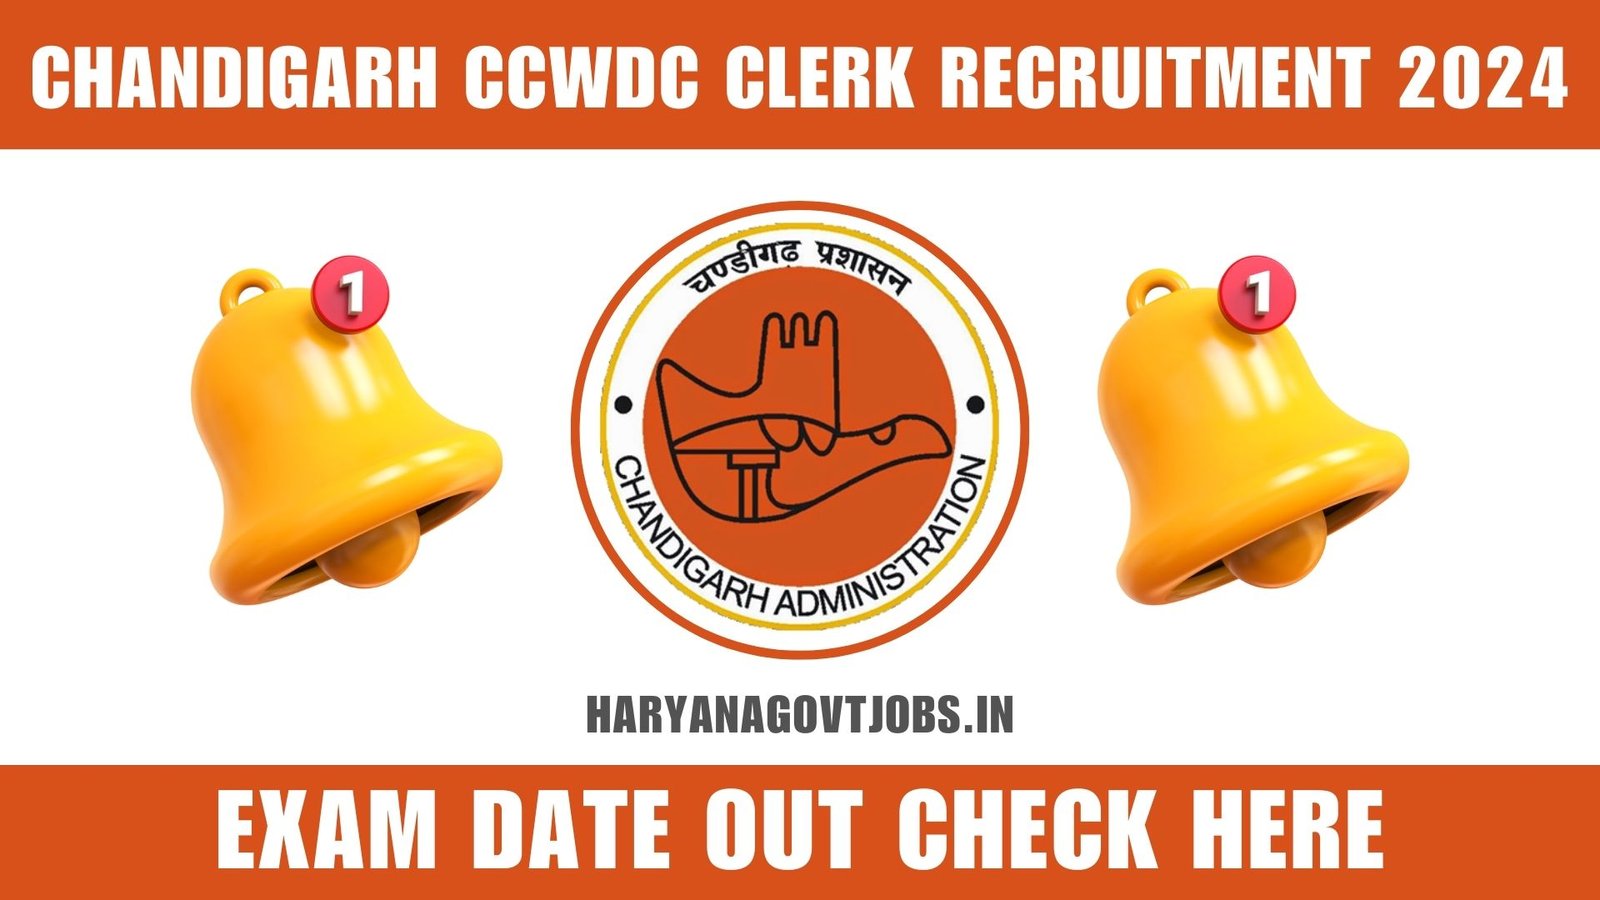 Chandigarh CCWDC Clerk Recruitment 2024 Notification Overview